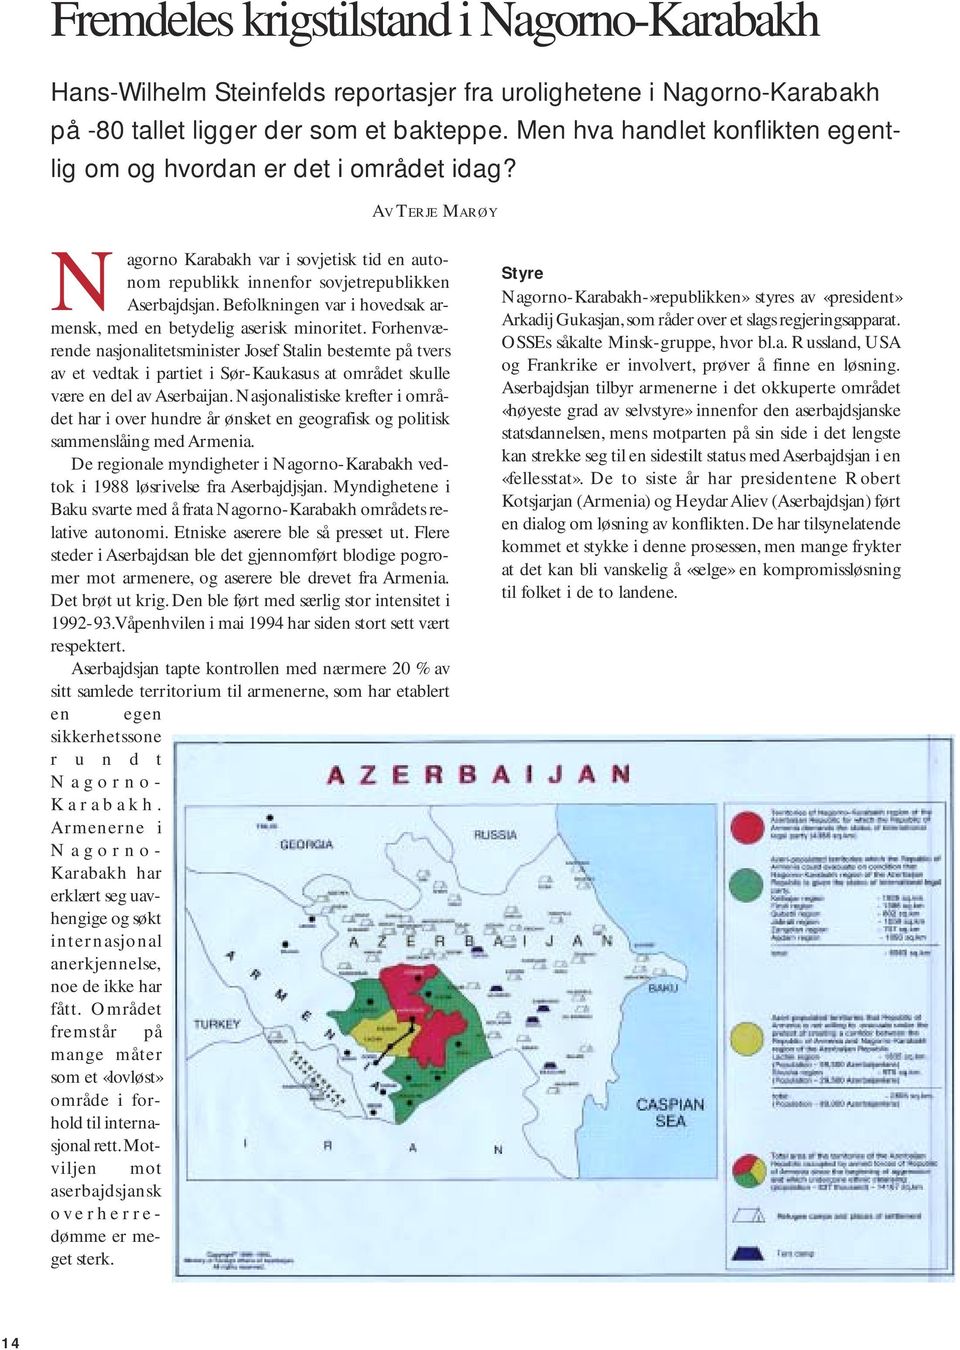 Befolkningen var i hovedsak ar- Nmensk, med en betydelig aserisk minoritet.